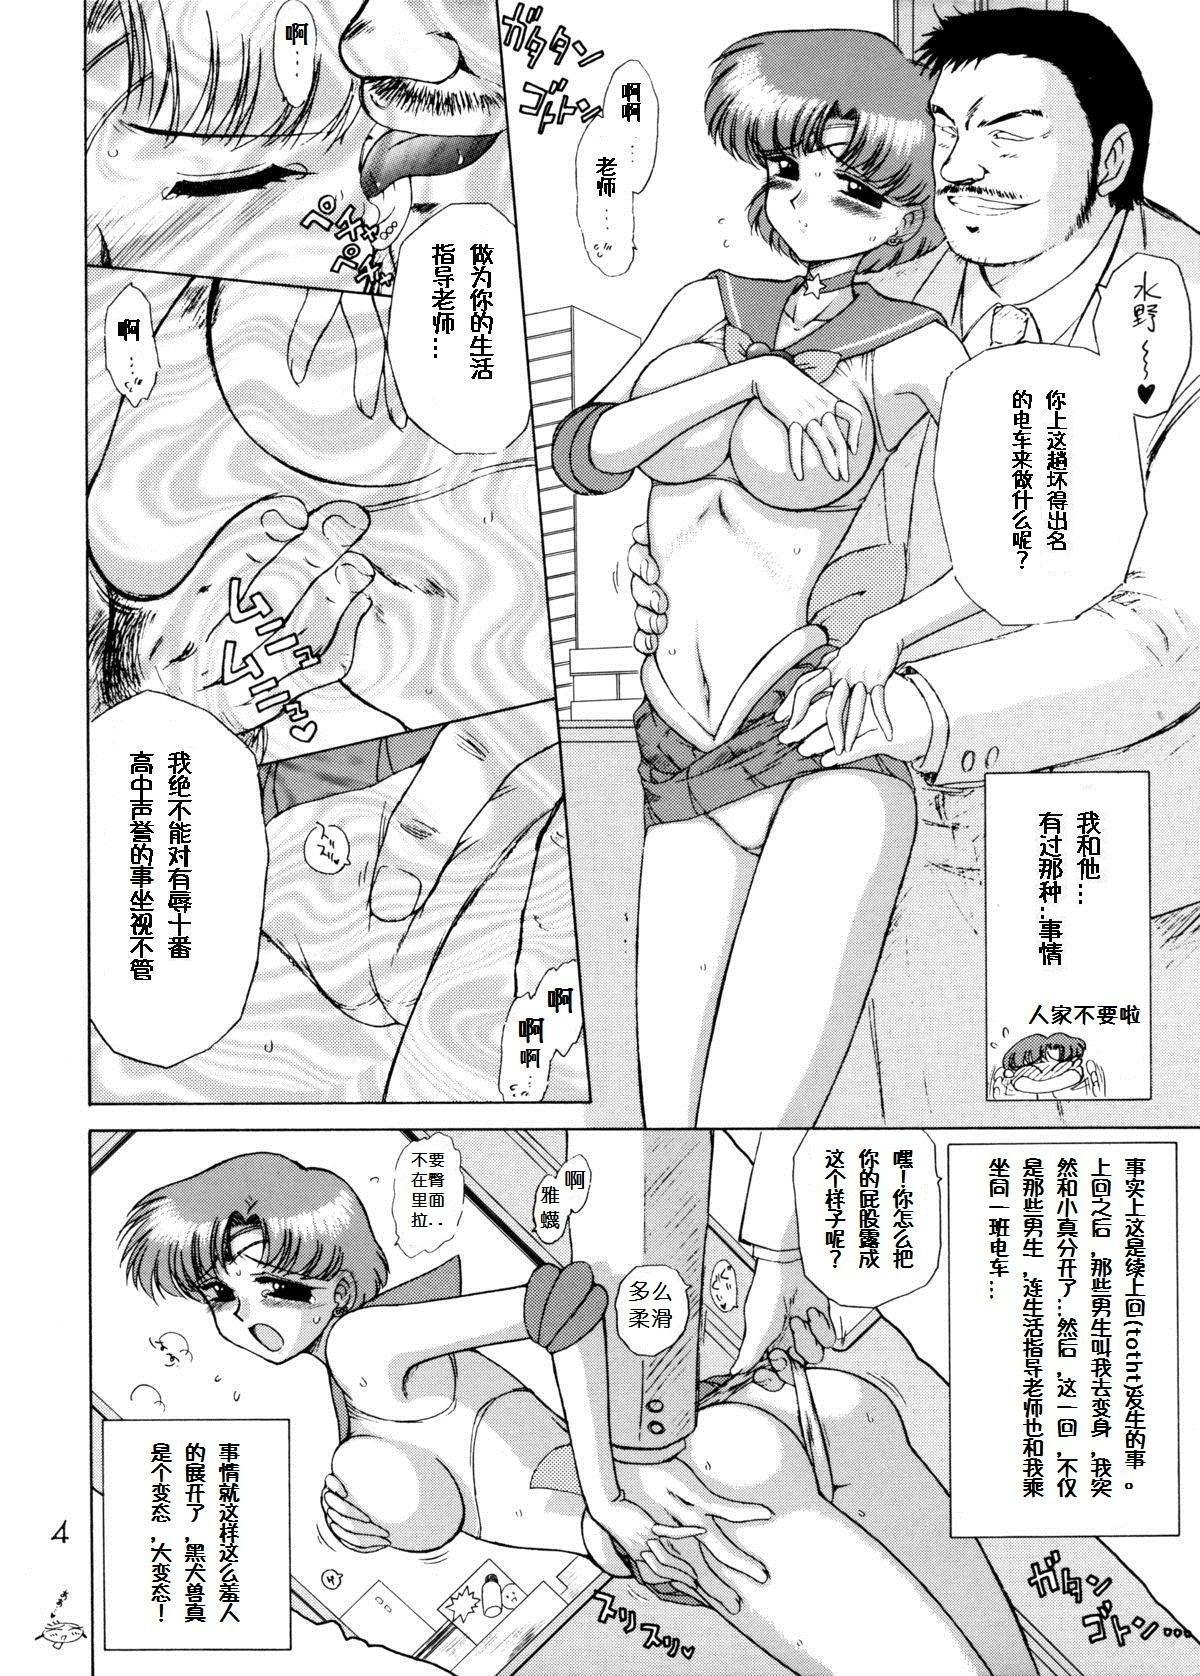 Milfporn Anubis - Sailor moon Tranny Porn - Page 4